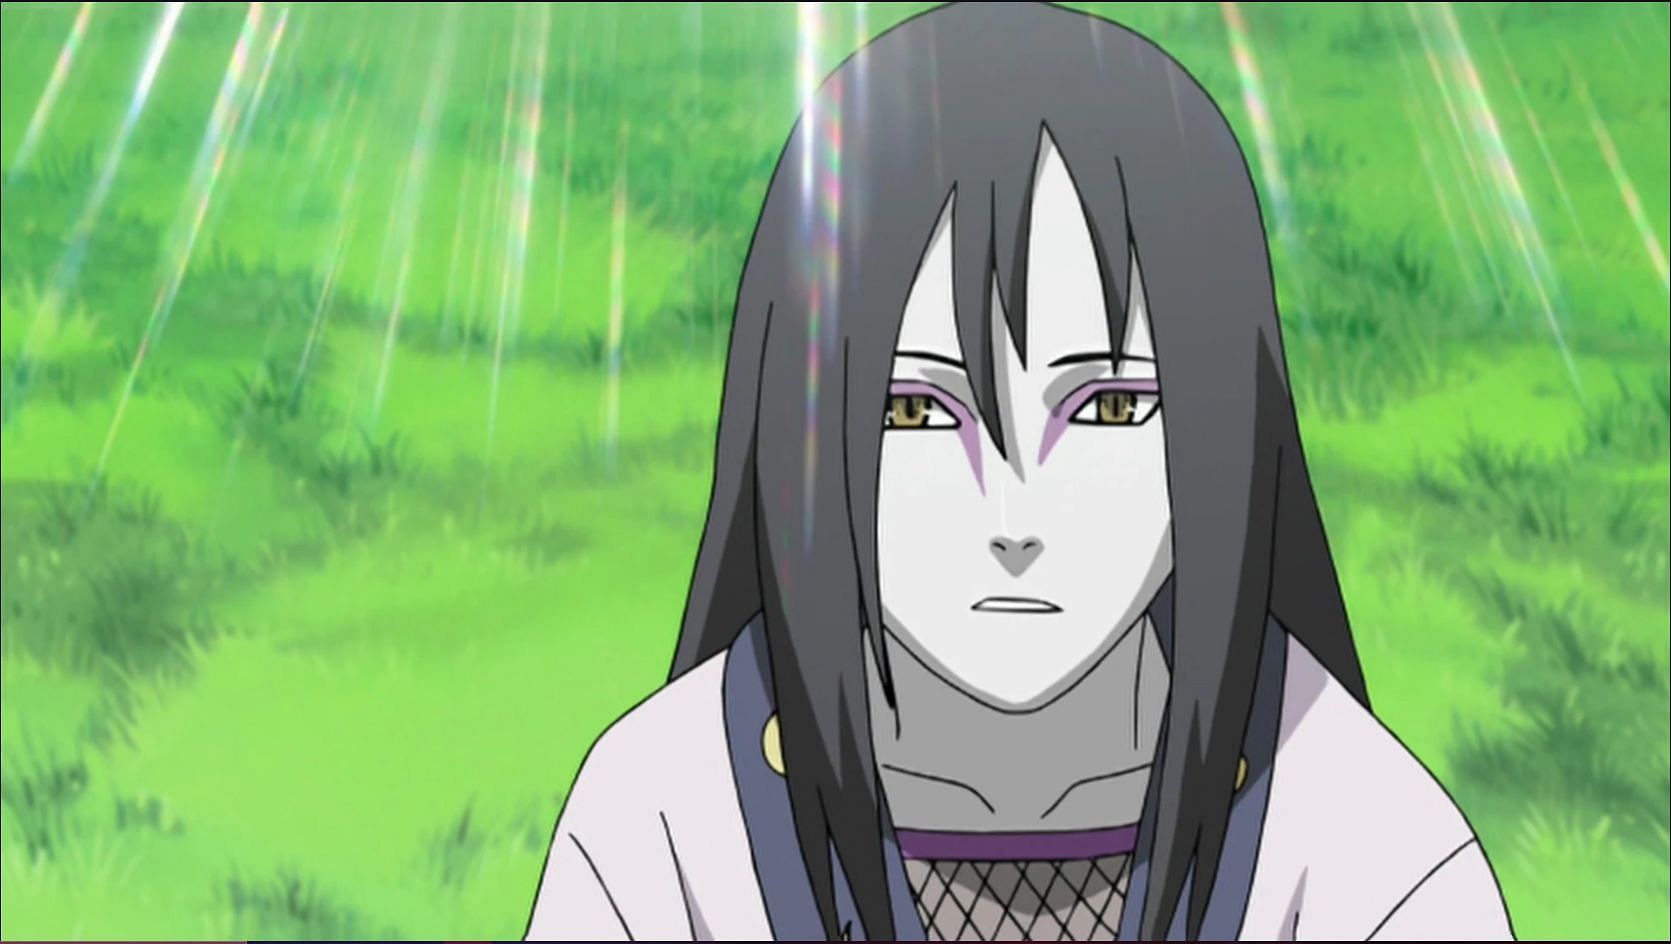 Orochimaru as shown in the anime (Image via Naruto)